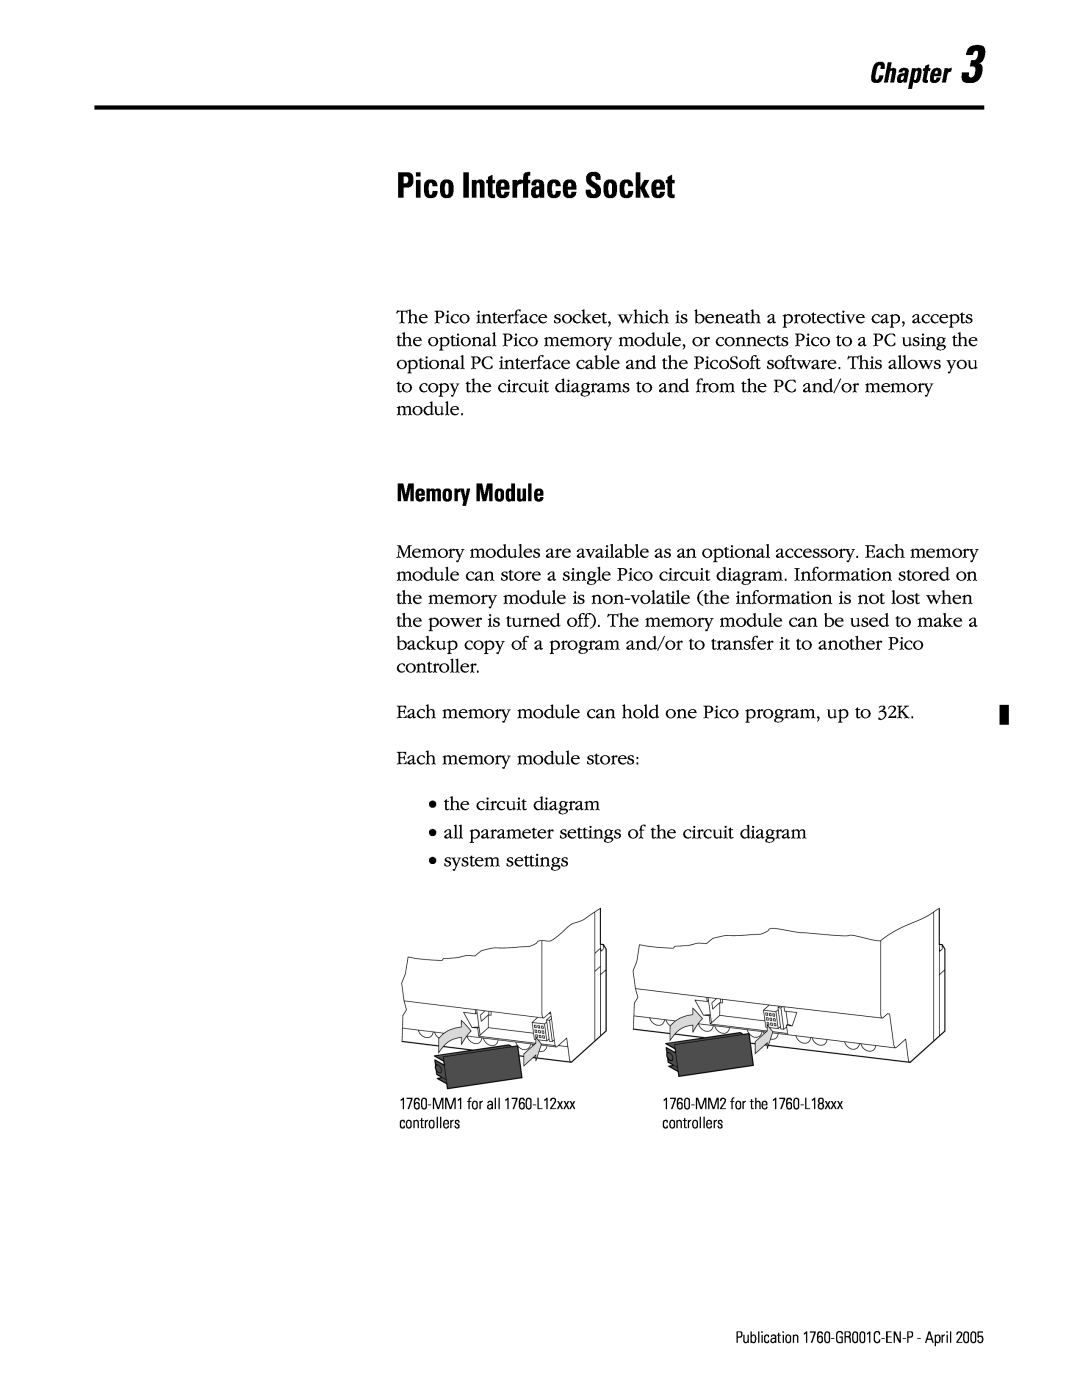 AB Soft 1760 manual Pico Interface Socket, Memory Module, Chapter 